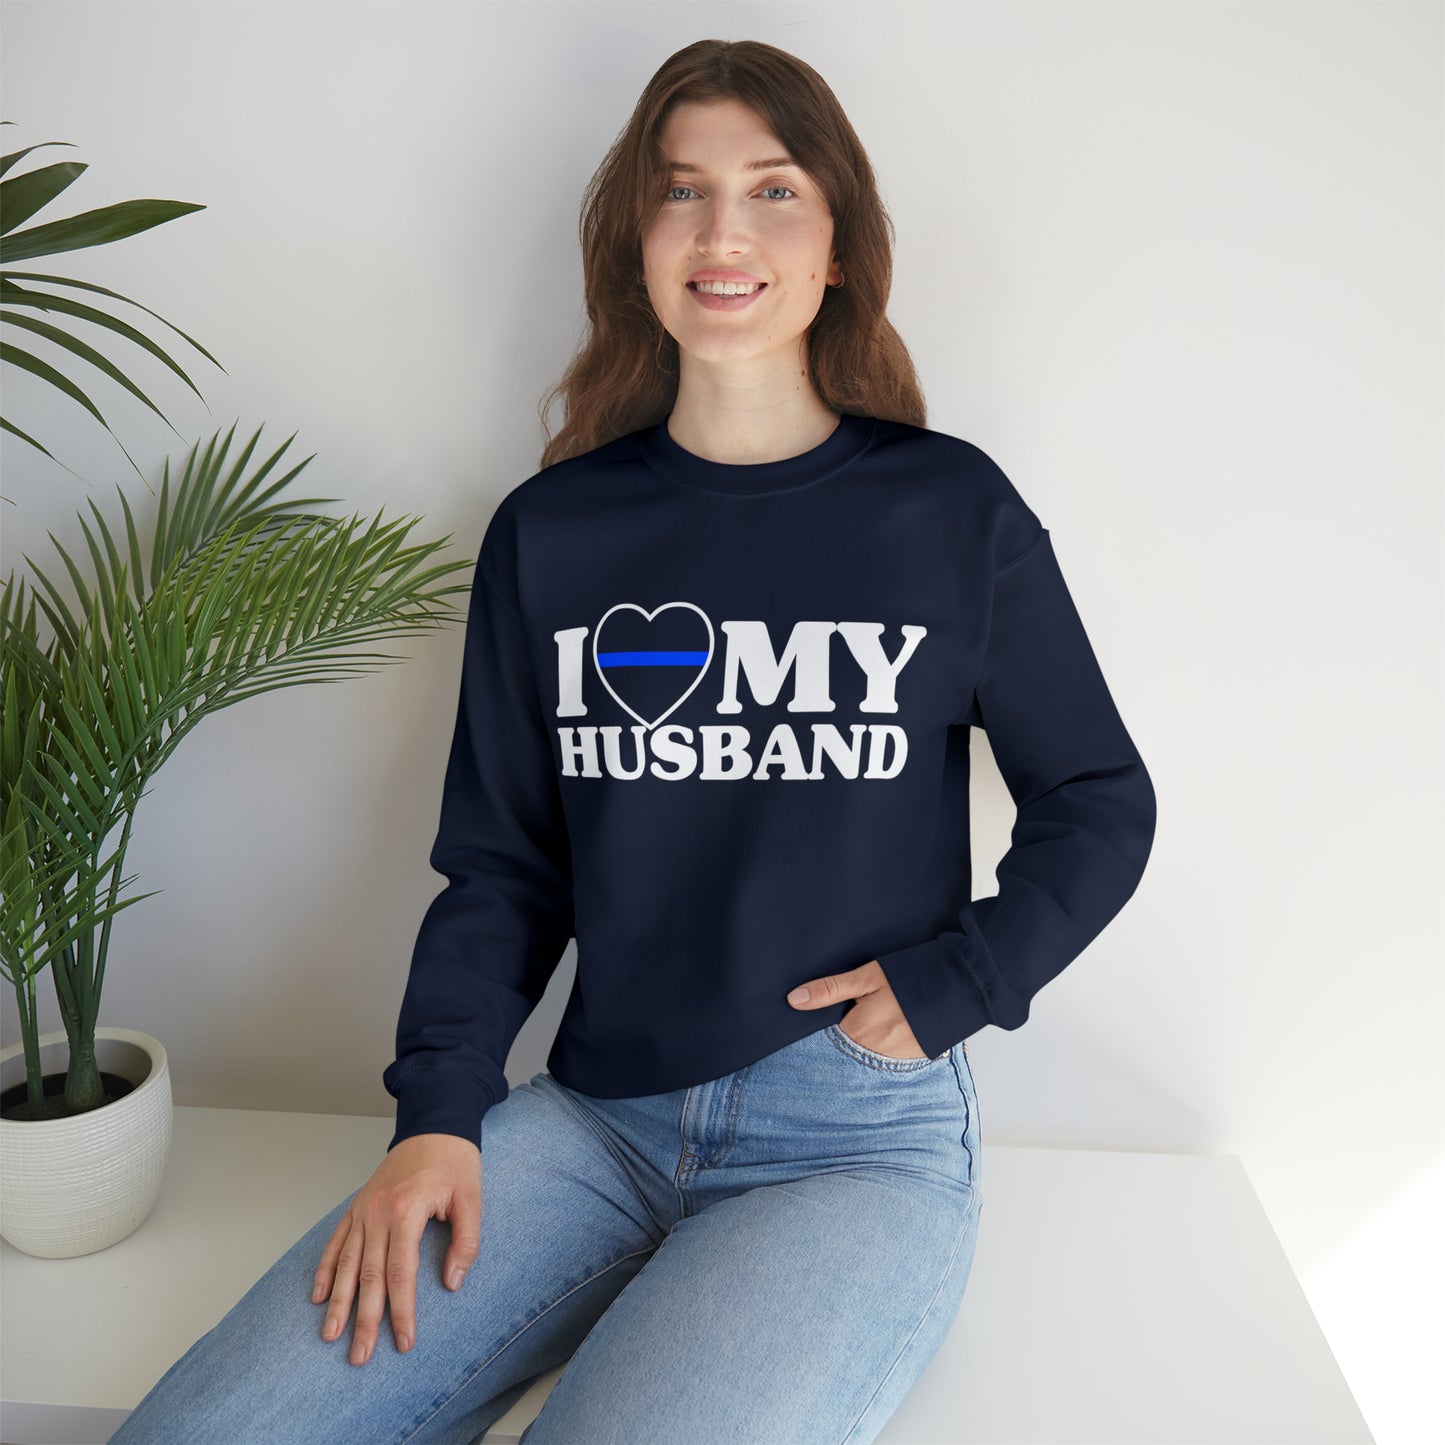 I Love My Husband Thin Blue Line Crewneck Sweatshirt